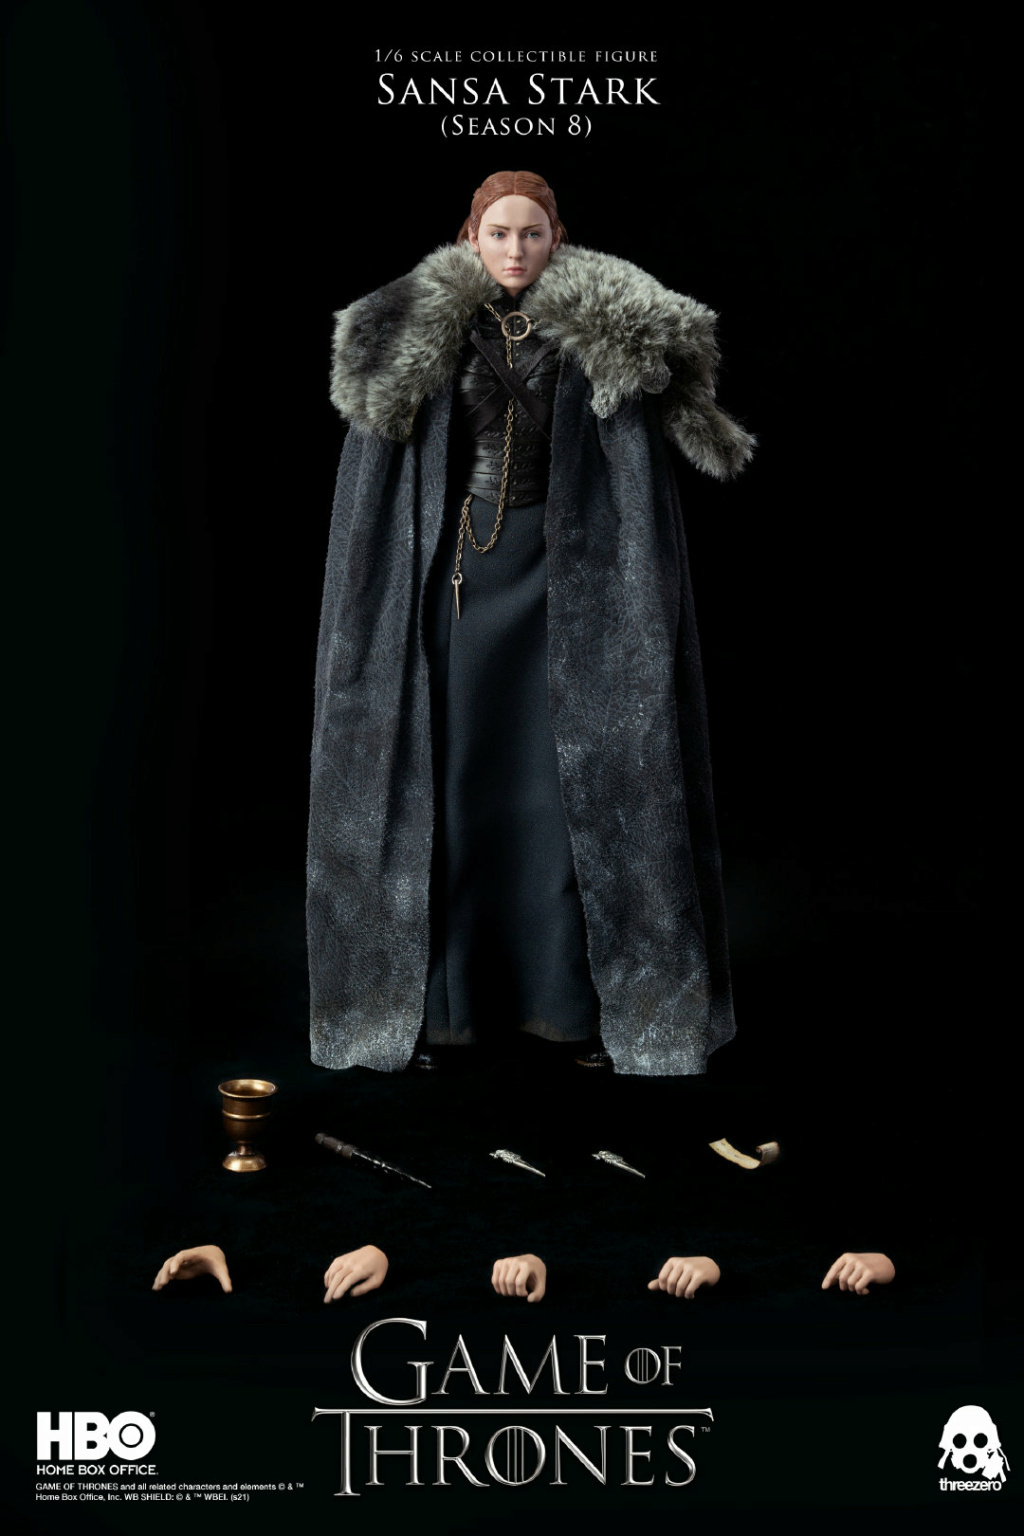 GameofThrones - NEW PRODUCT: Threezero: 1/6 "A Song of Ice and Fire: Game of Thrones" Sansa Stark/Sansa Stark Action Figure 10184111